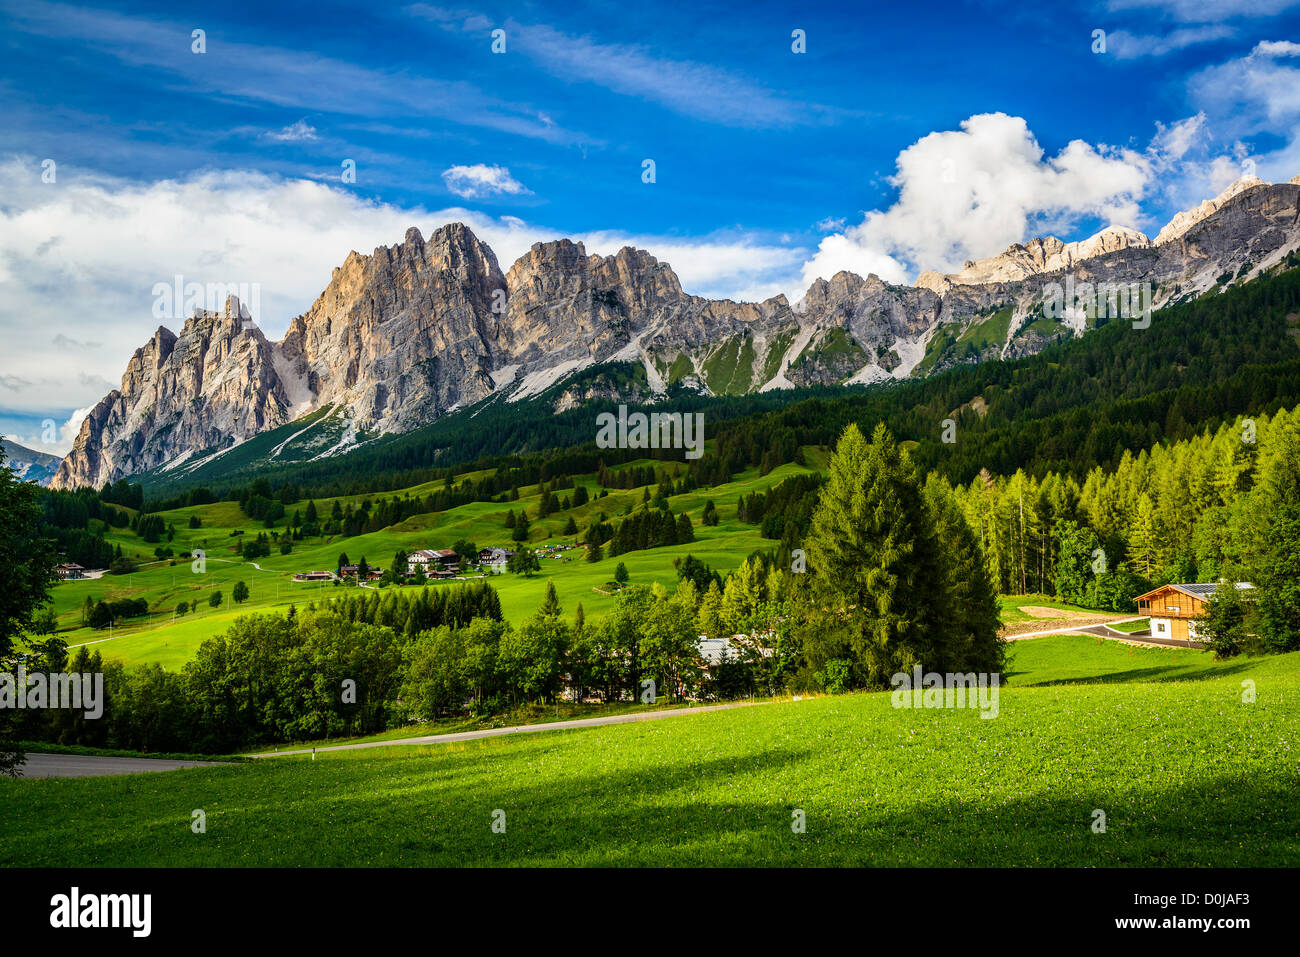 Dolomite mountains near Cortina D'ampezzo, Italy Stock Photo - Alamy